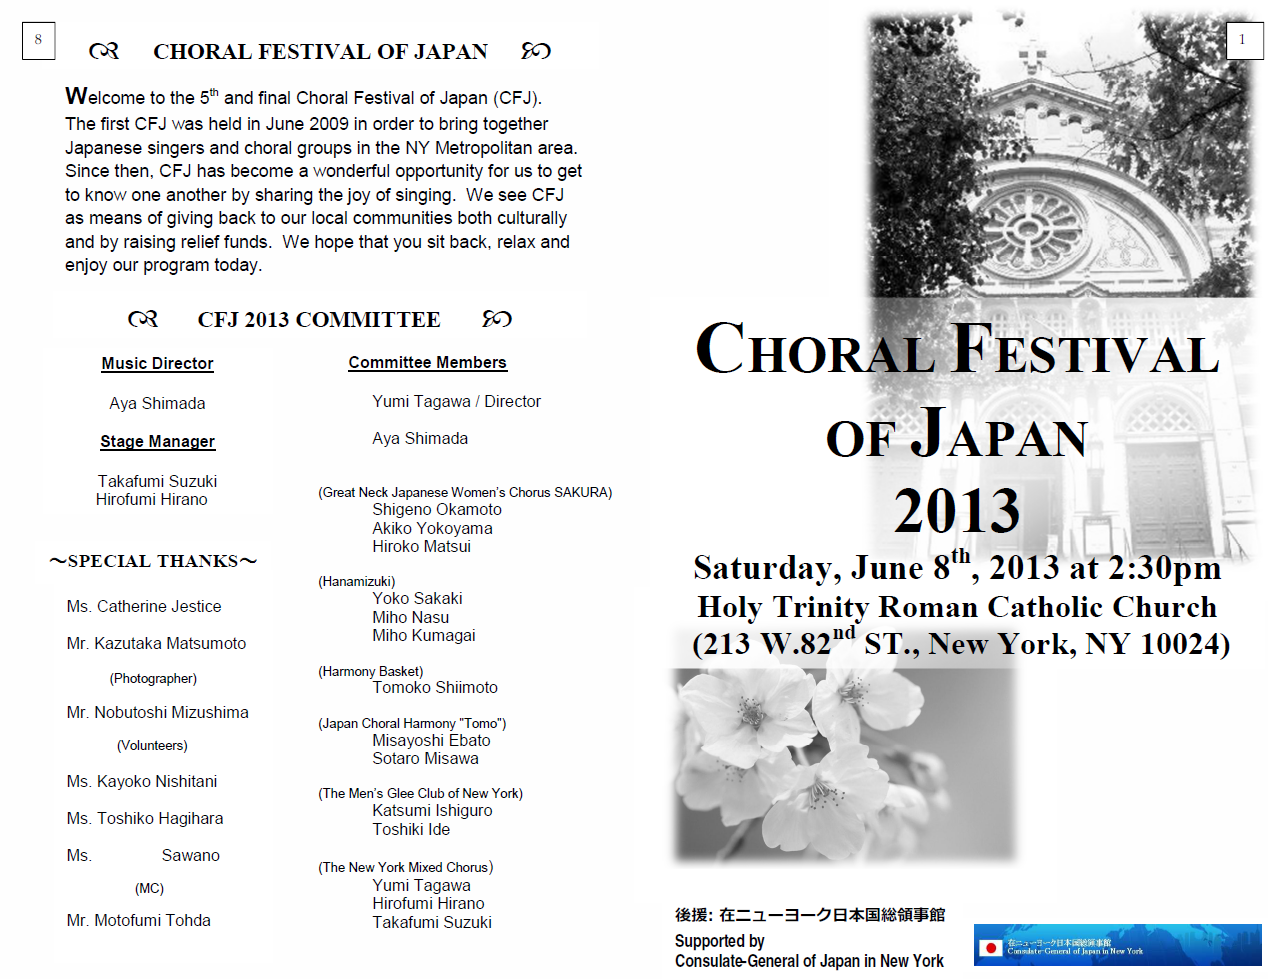 Choral Festival of Japan 2013